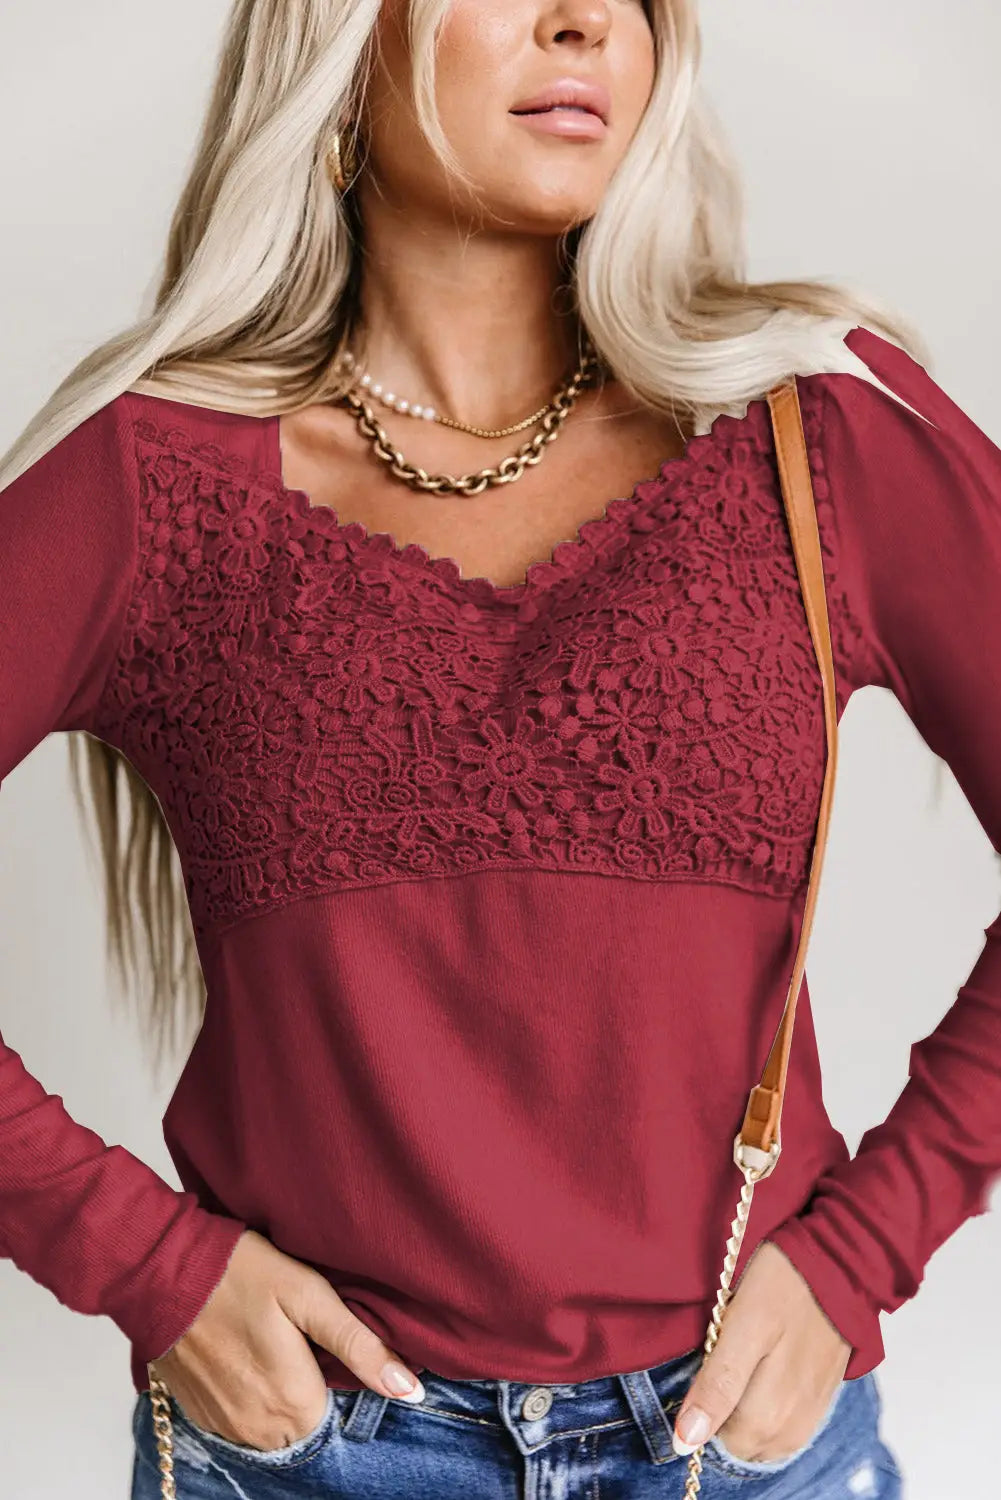 Beige lace crochet v neck long sleeve top - tops